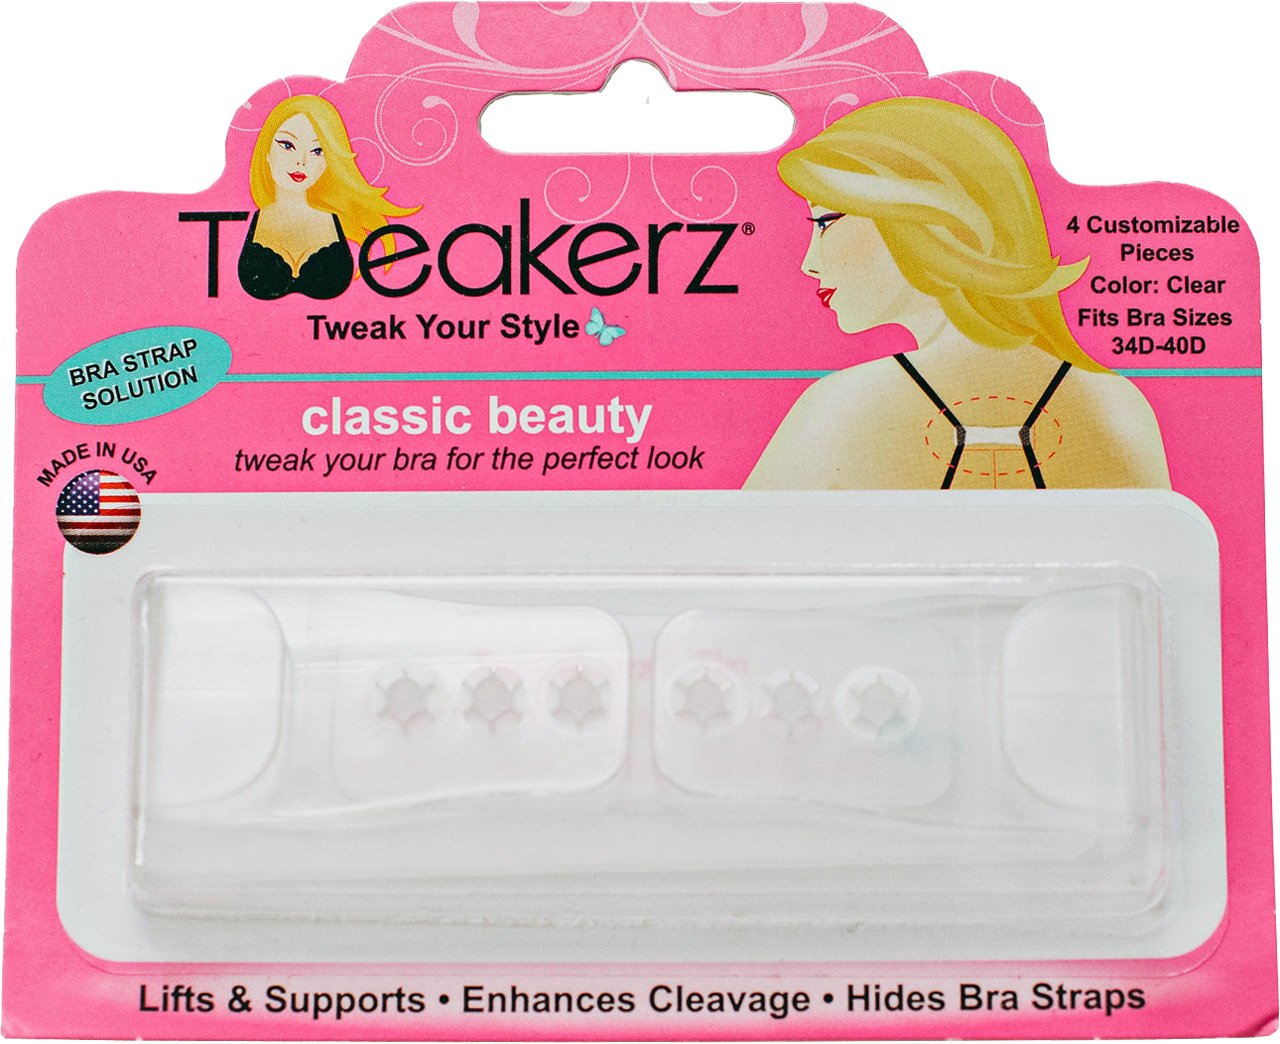 Tweakerz Customizable Bra Strap Solution - www.tweakerz.com